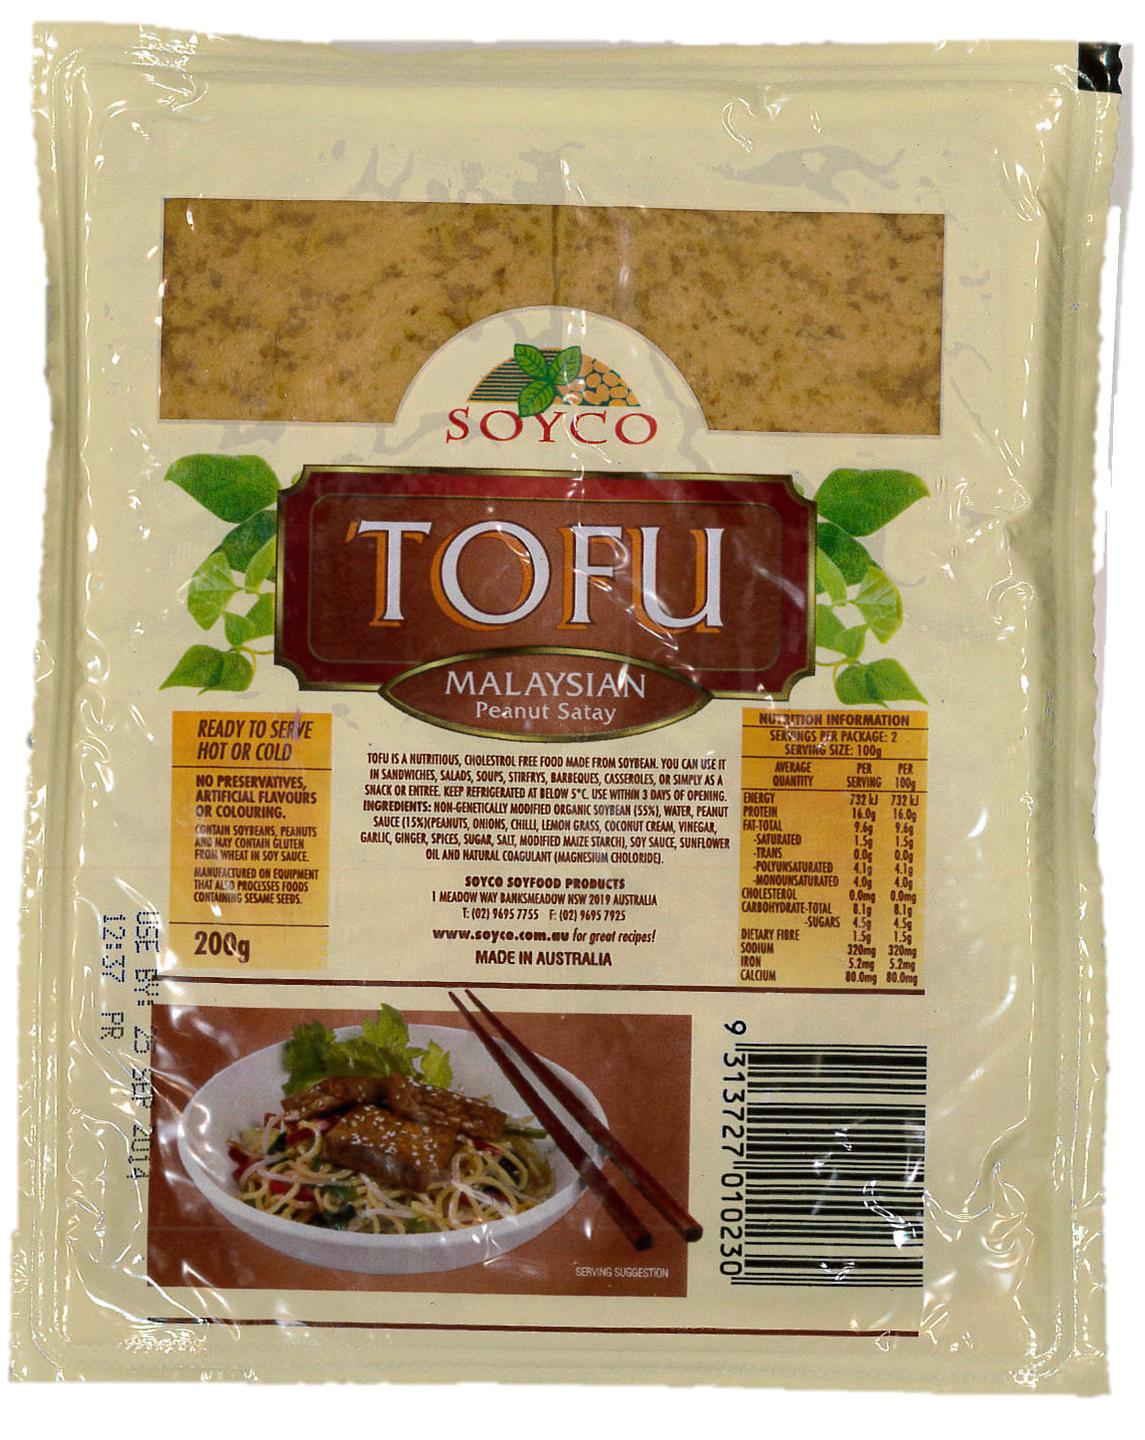 Soyco Malaysian tofu